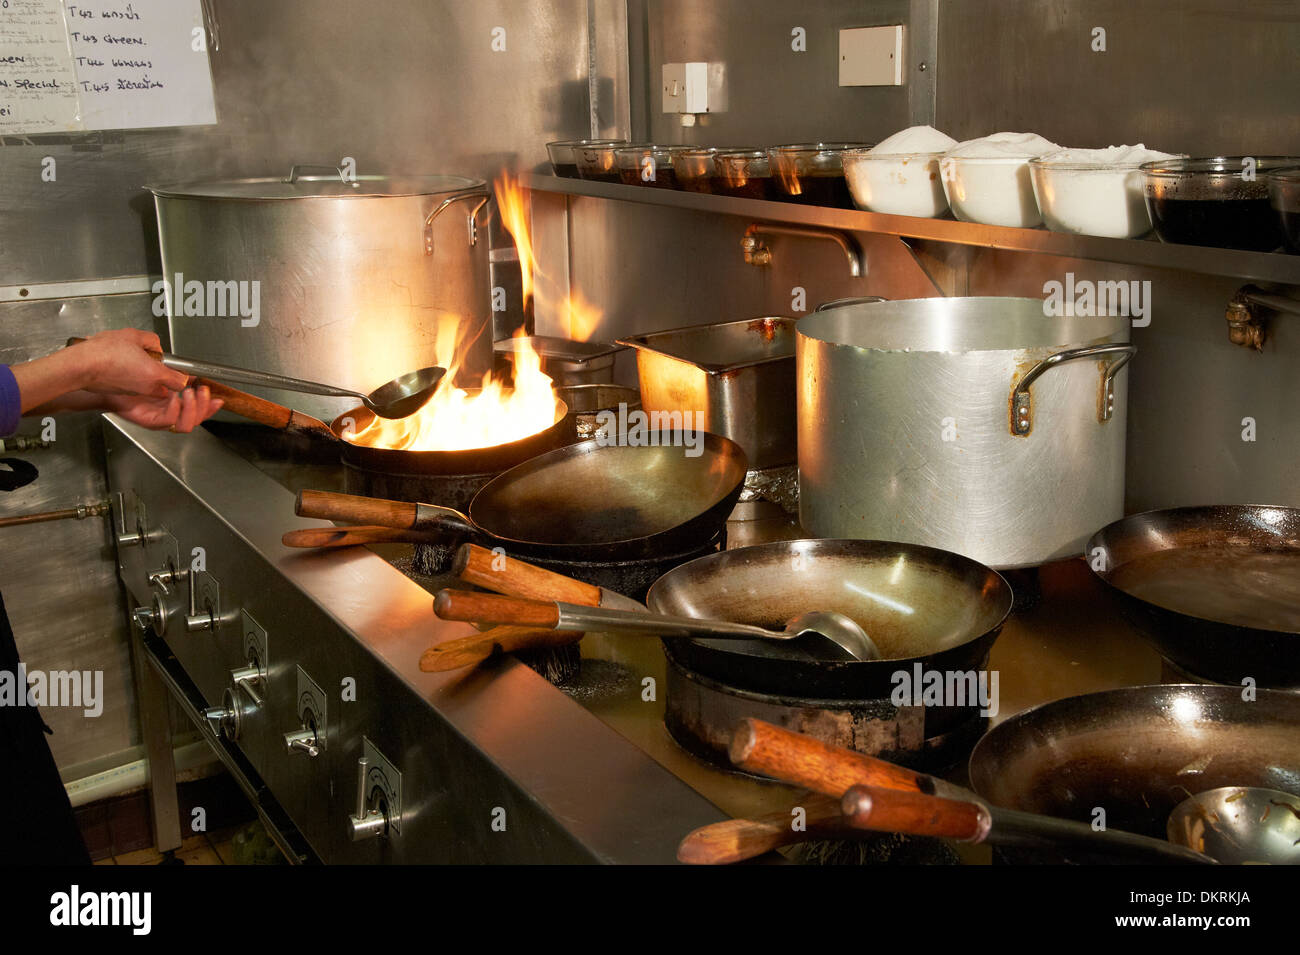 https://c8.alamy.com/comp/DKRKJA/chinese-cooking-with-woks-DKRKJA.jpg